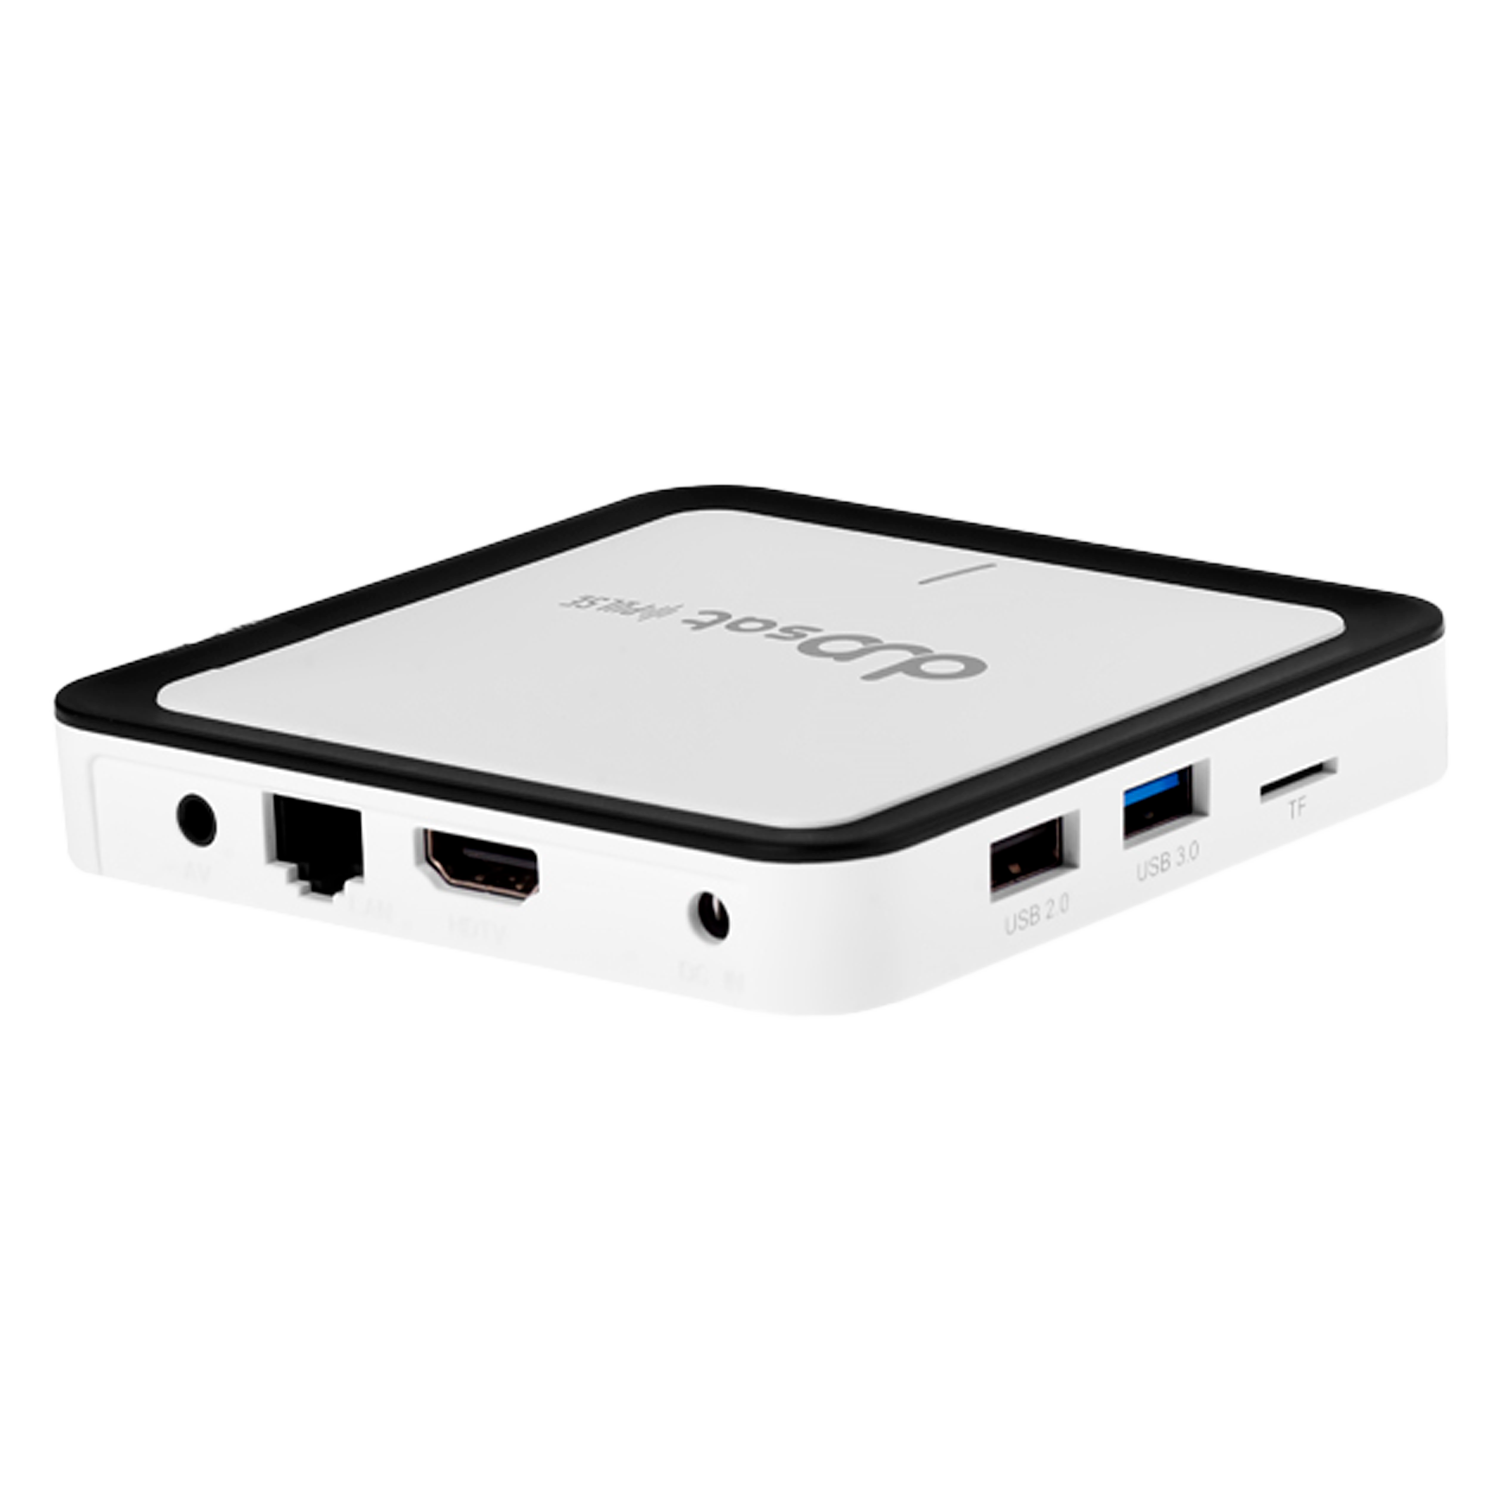 Receptor Duosat Pulse 5G 4K 32GB 2GB RAM Wi-Fi - Branco